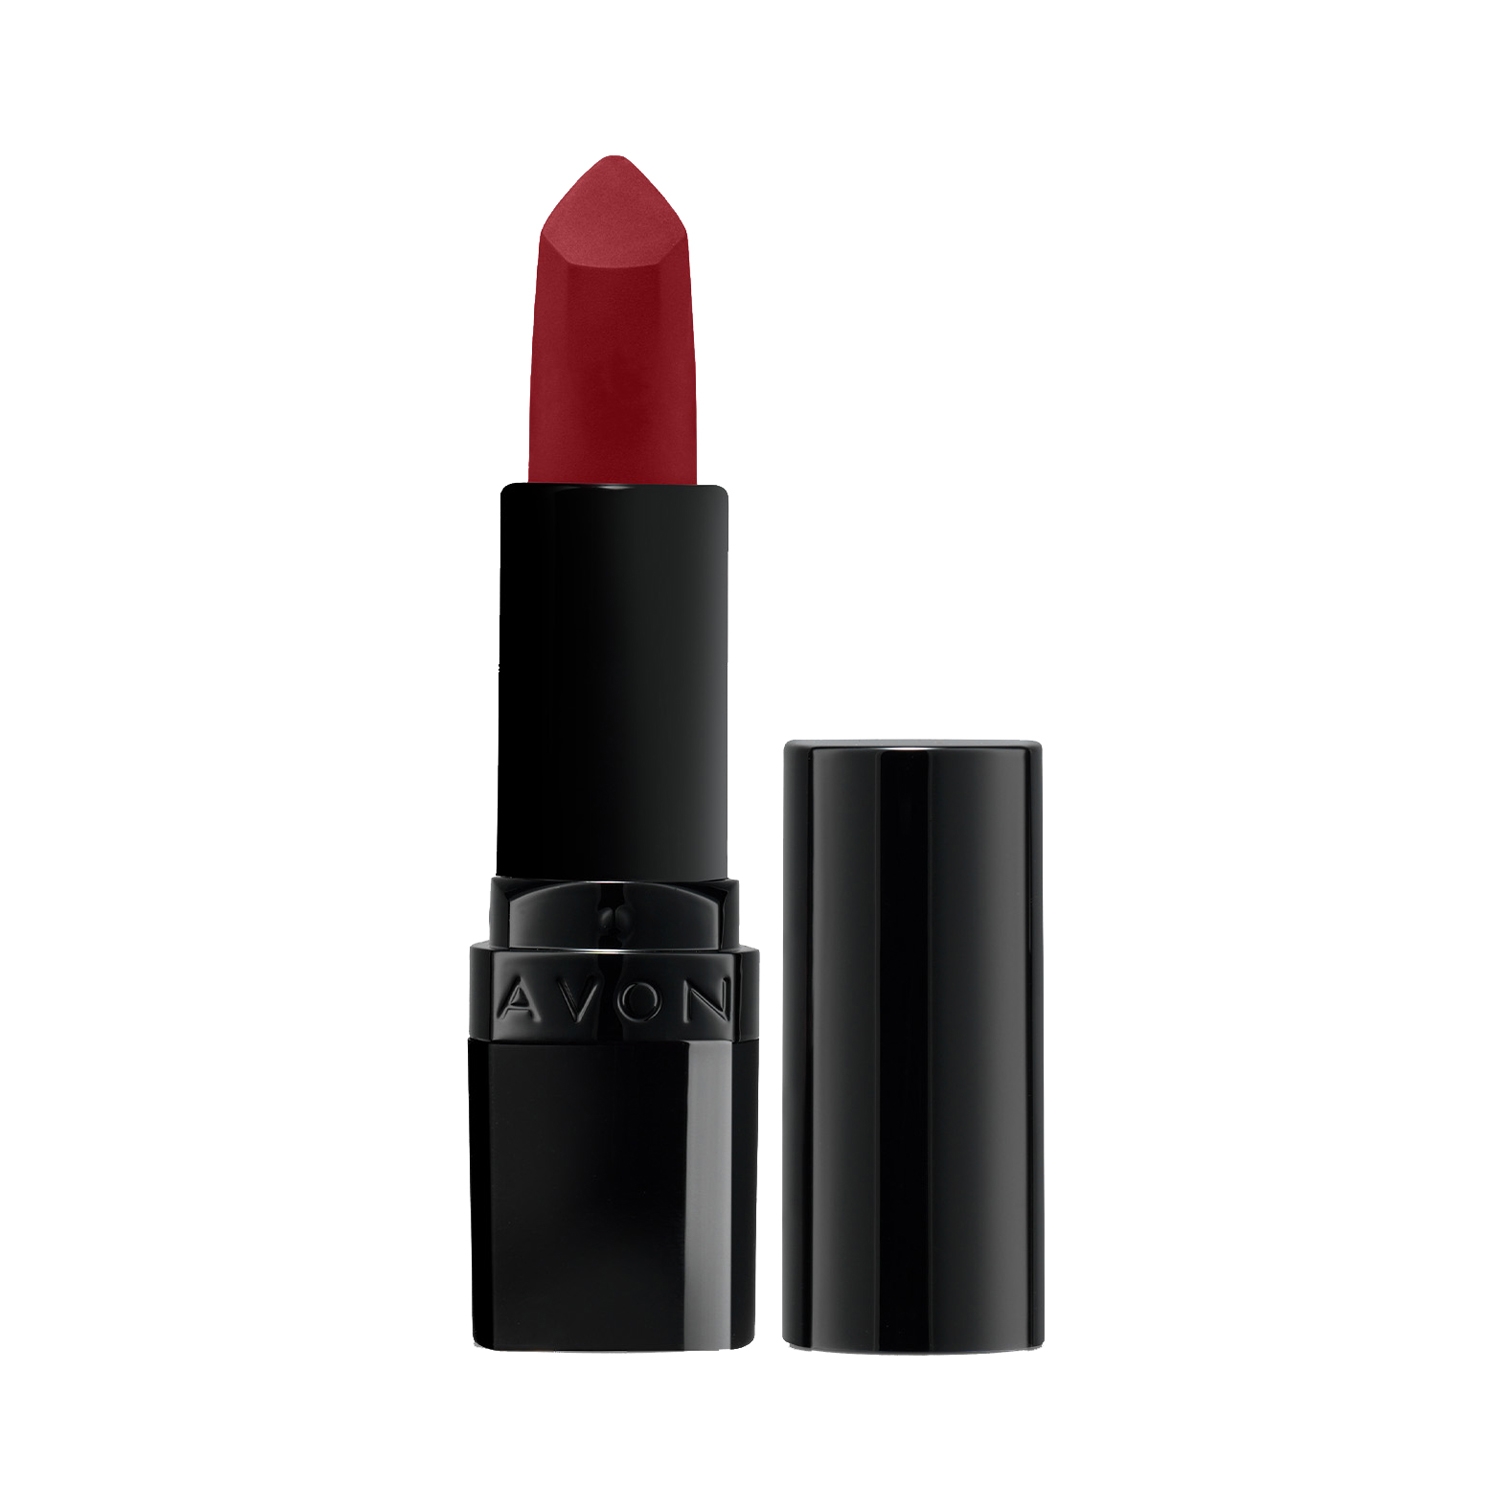 Avon | Avon Ultra Perfectly Matte Lipstick - Red Supreme (4g)